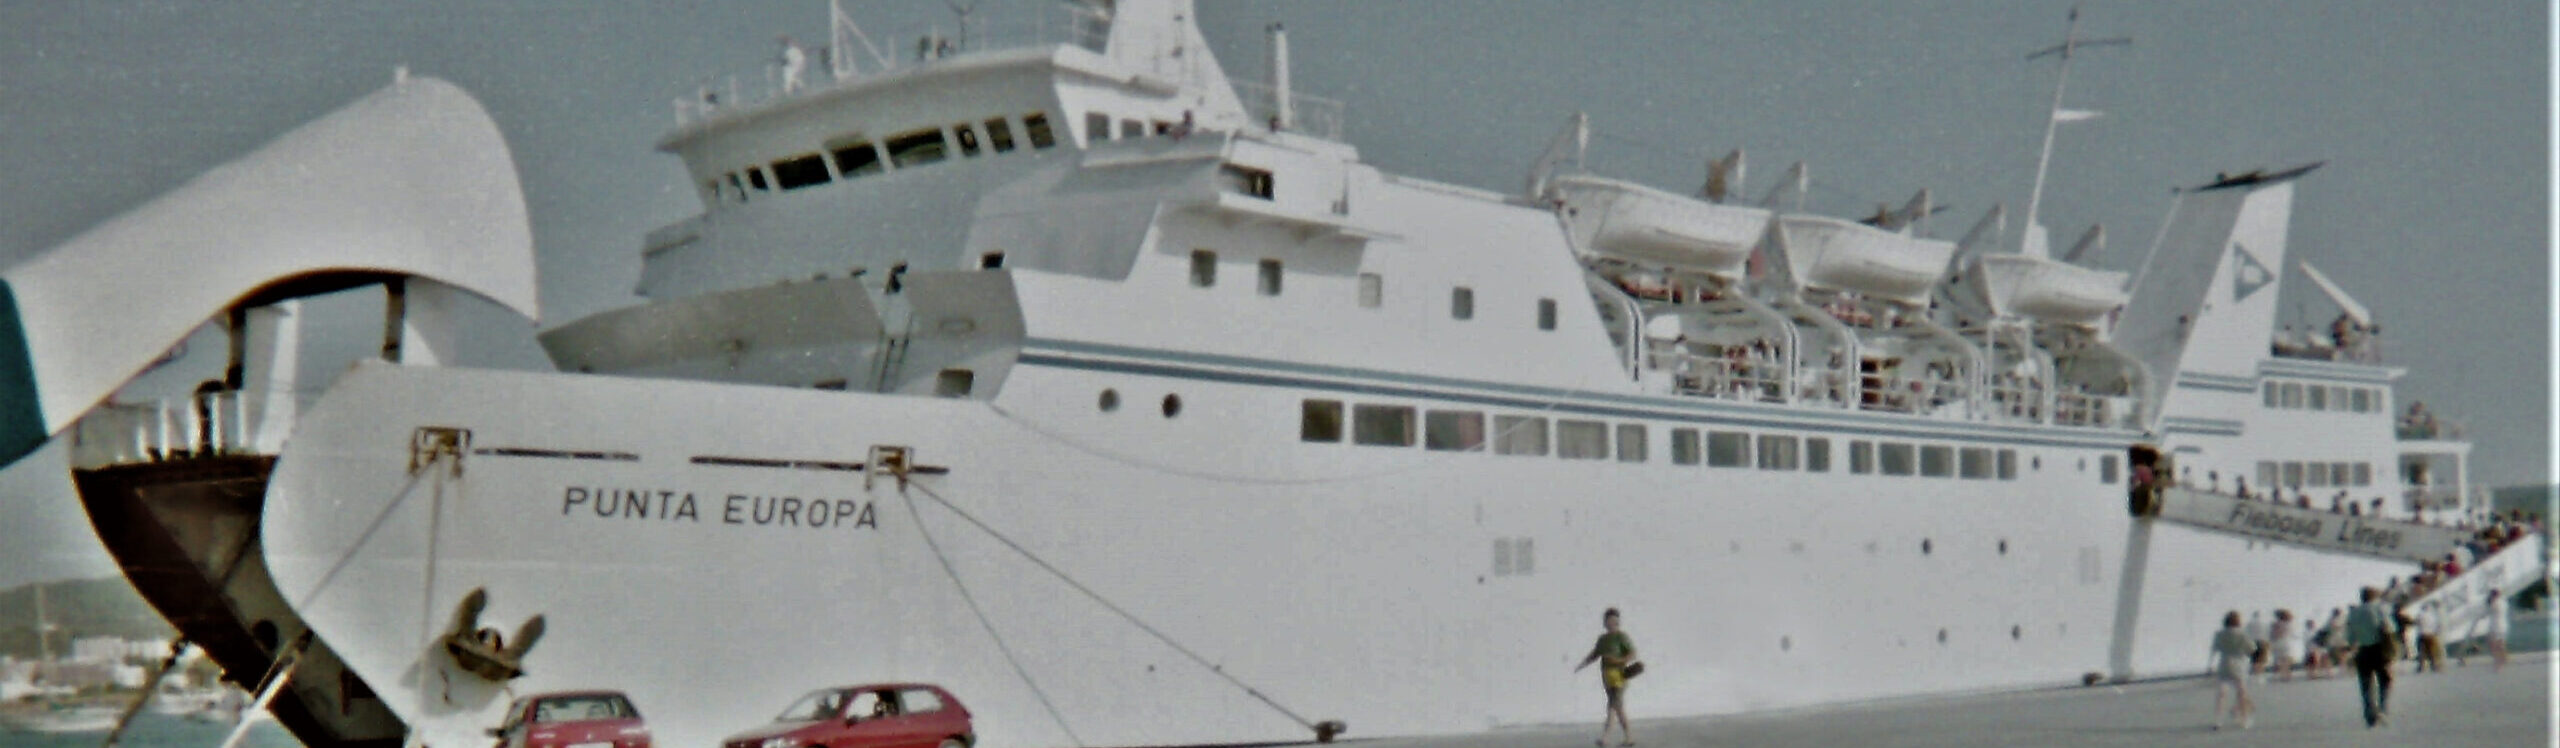 Foto barco pasajeros